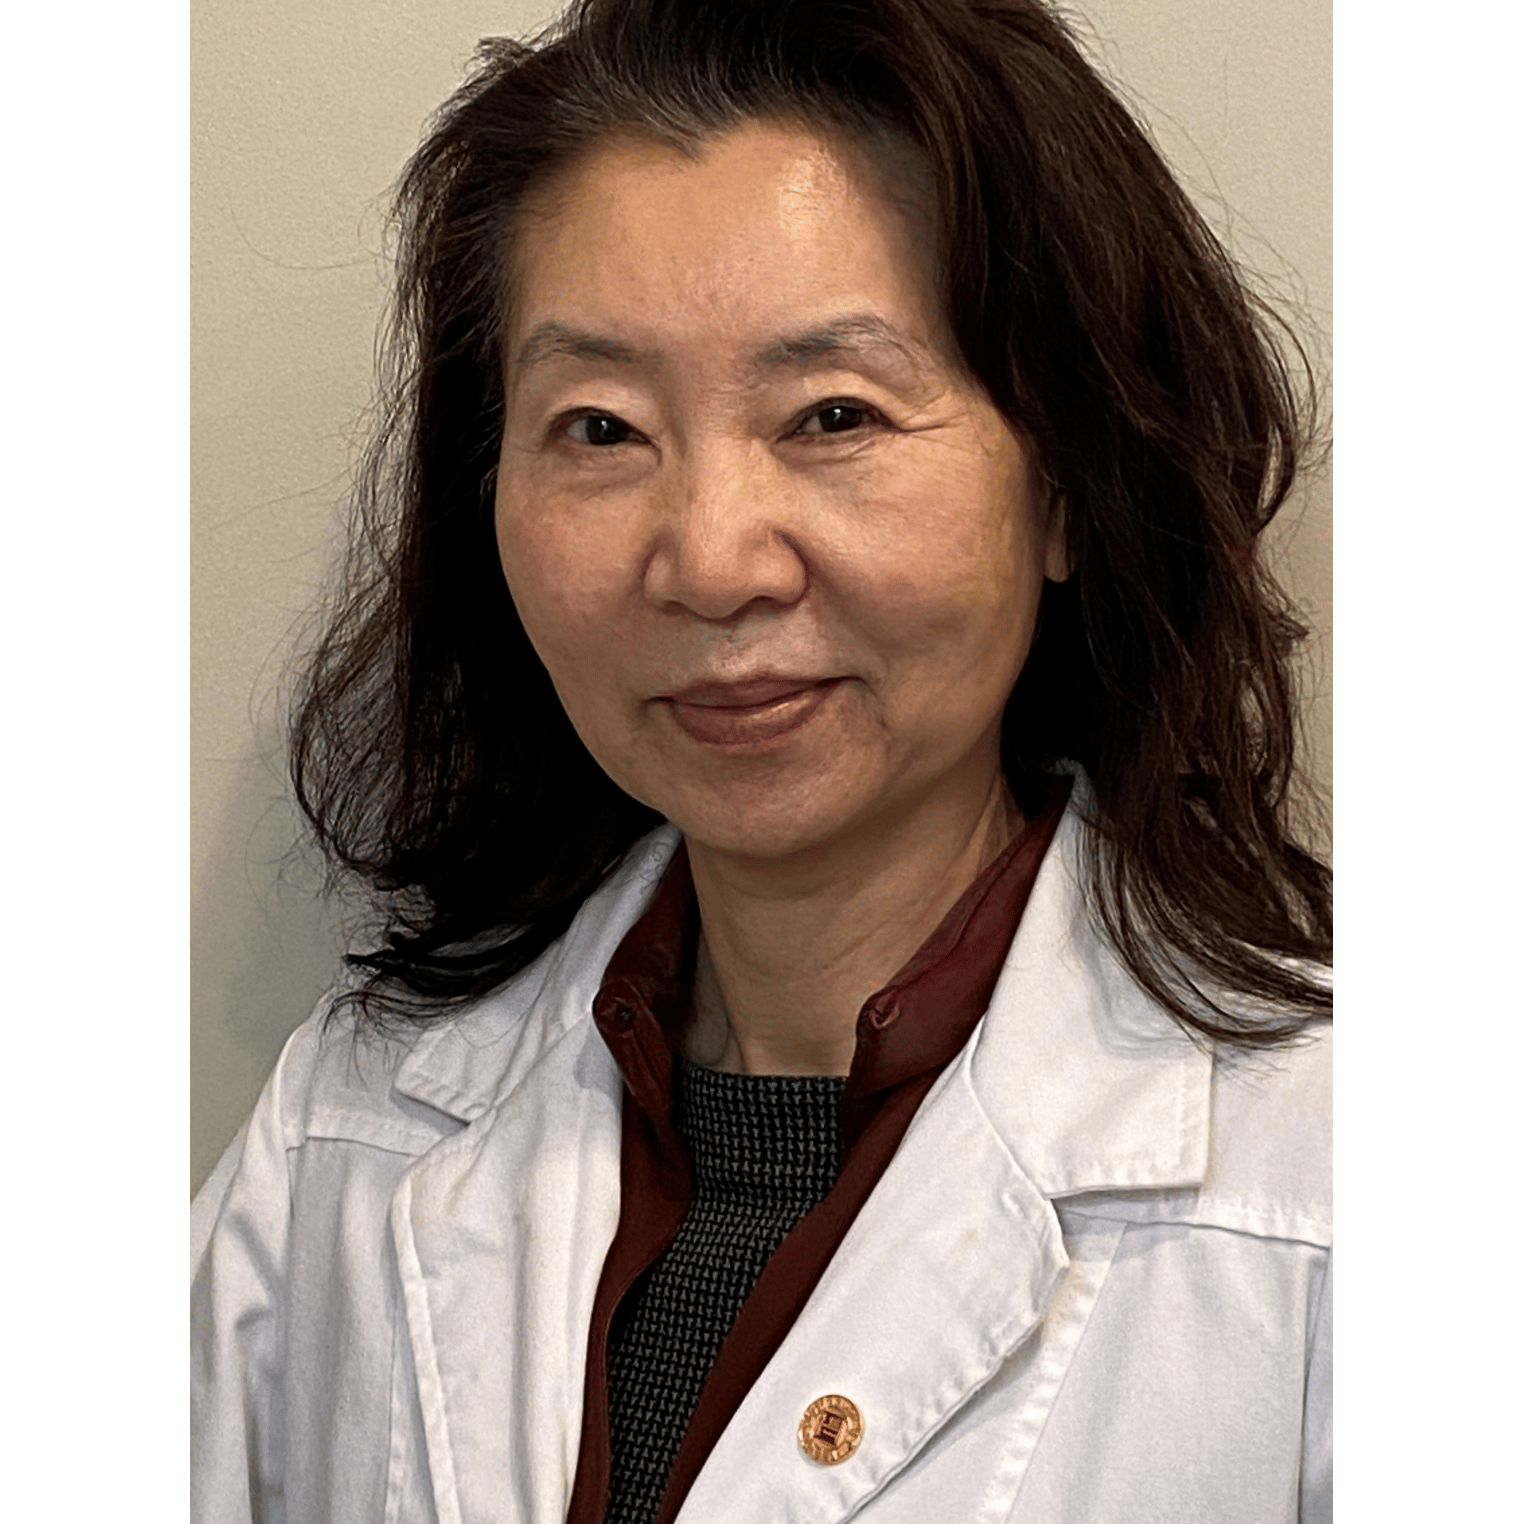 Dr. Kyung Hong, Optometrist, and Associates - Rose Plaza